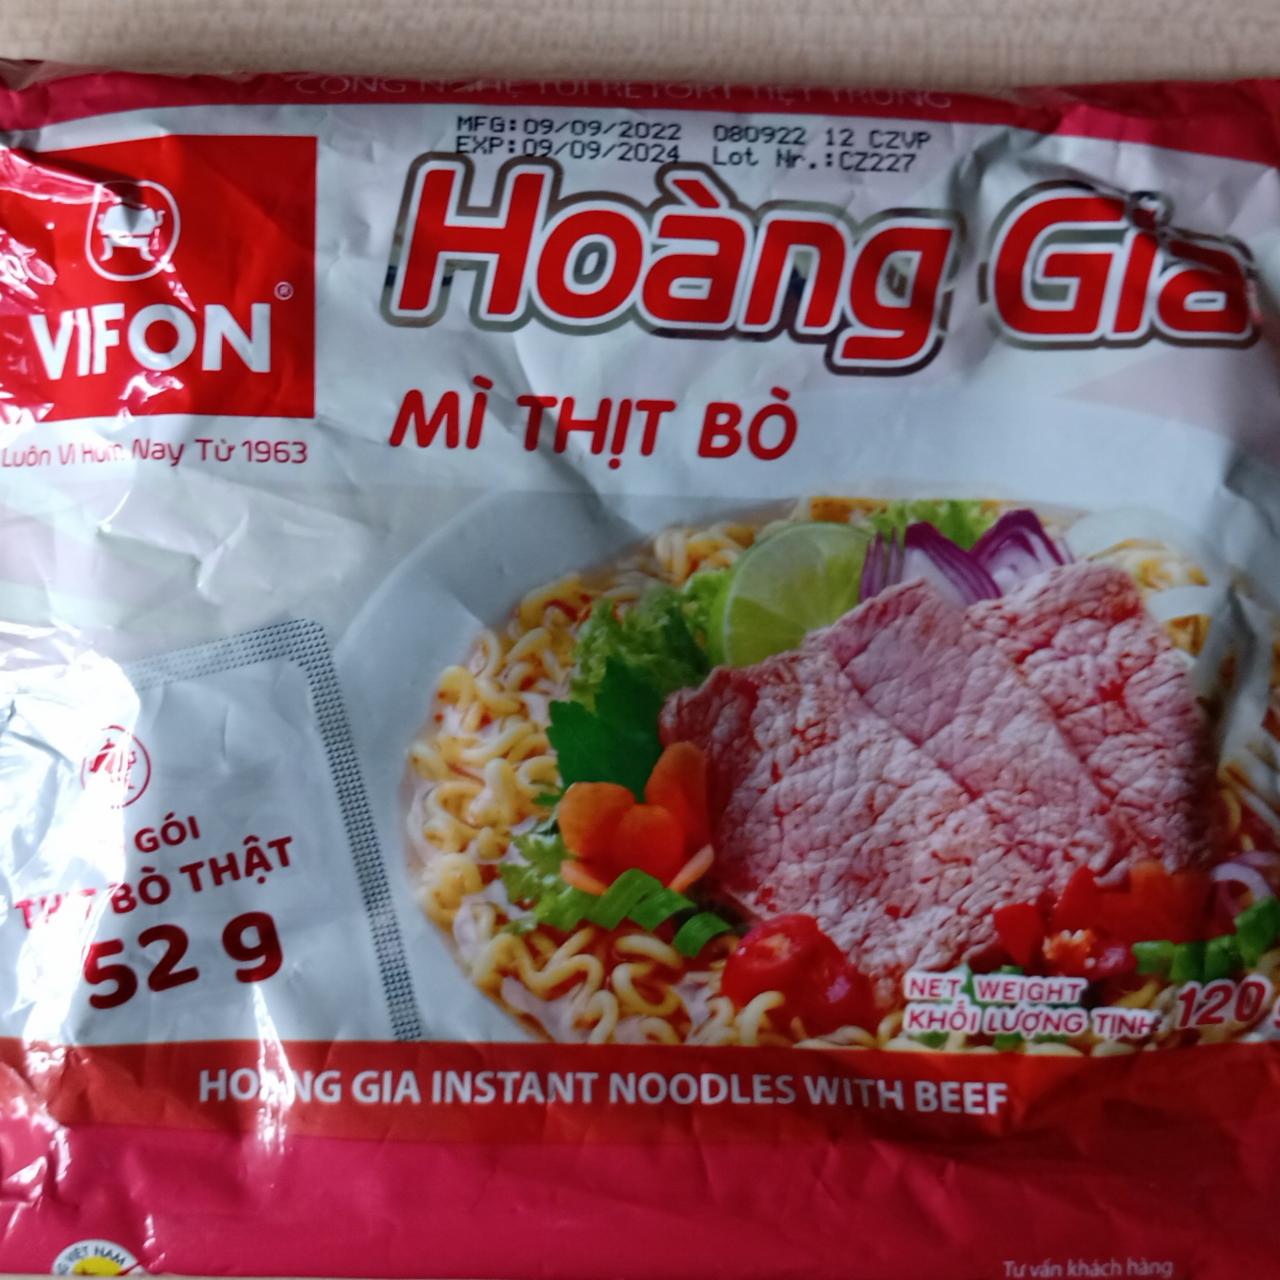 Fotografie - Hoang Gia instant noodles with beef Vifon